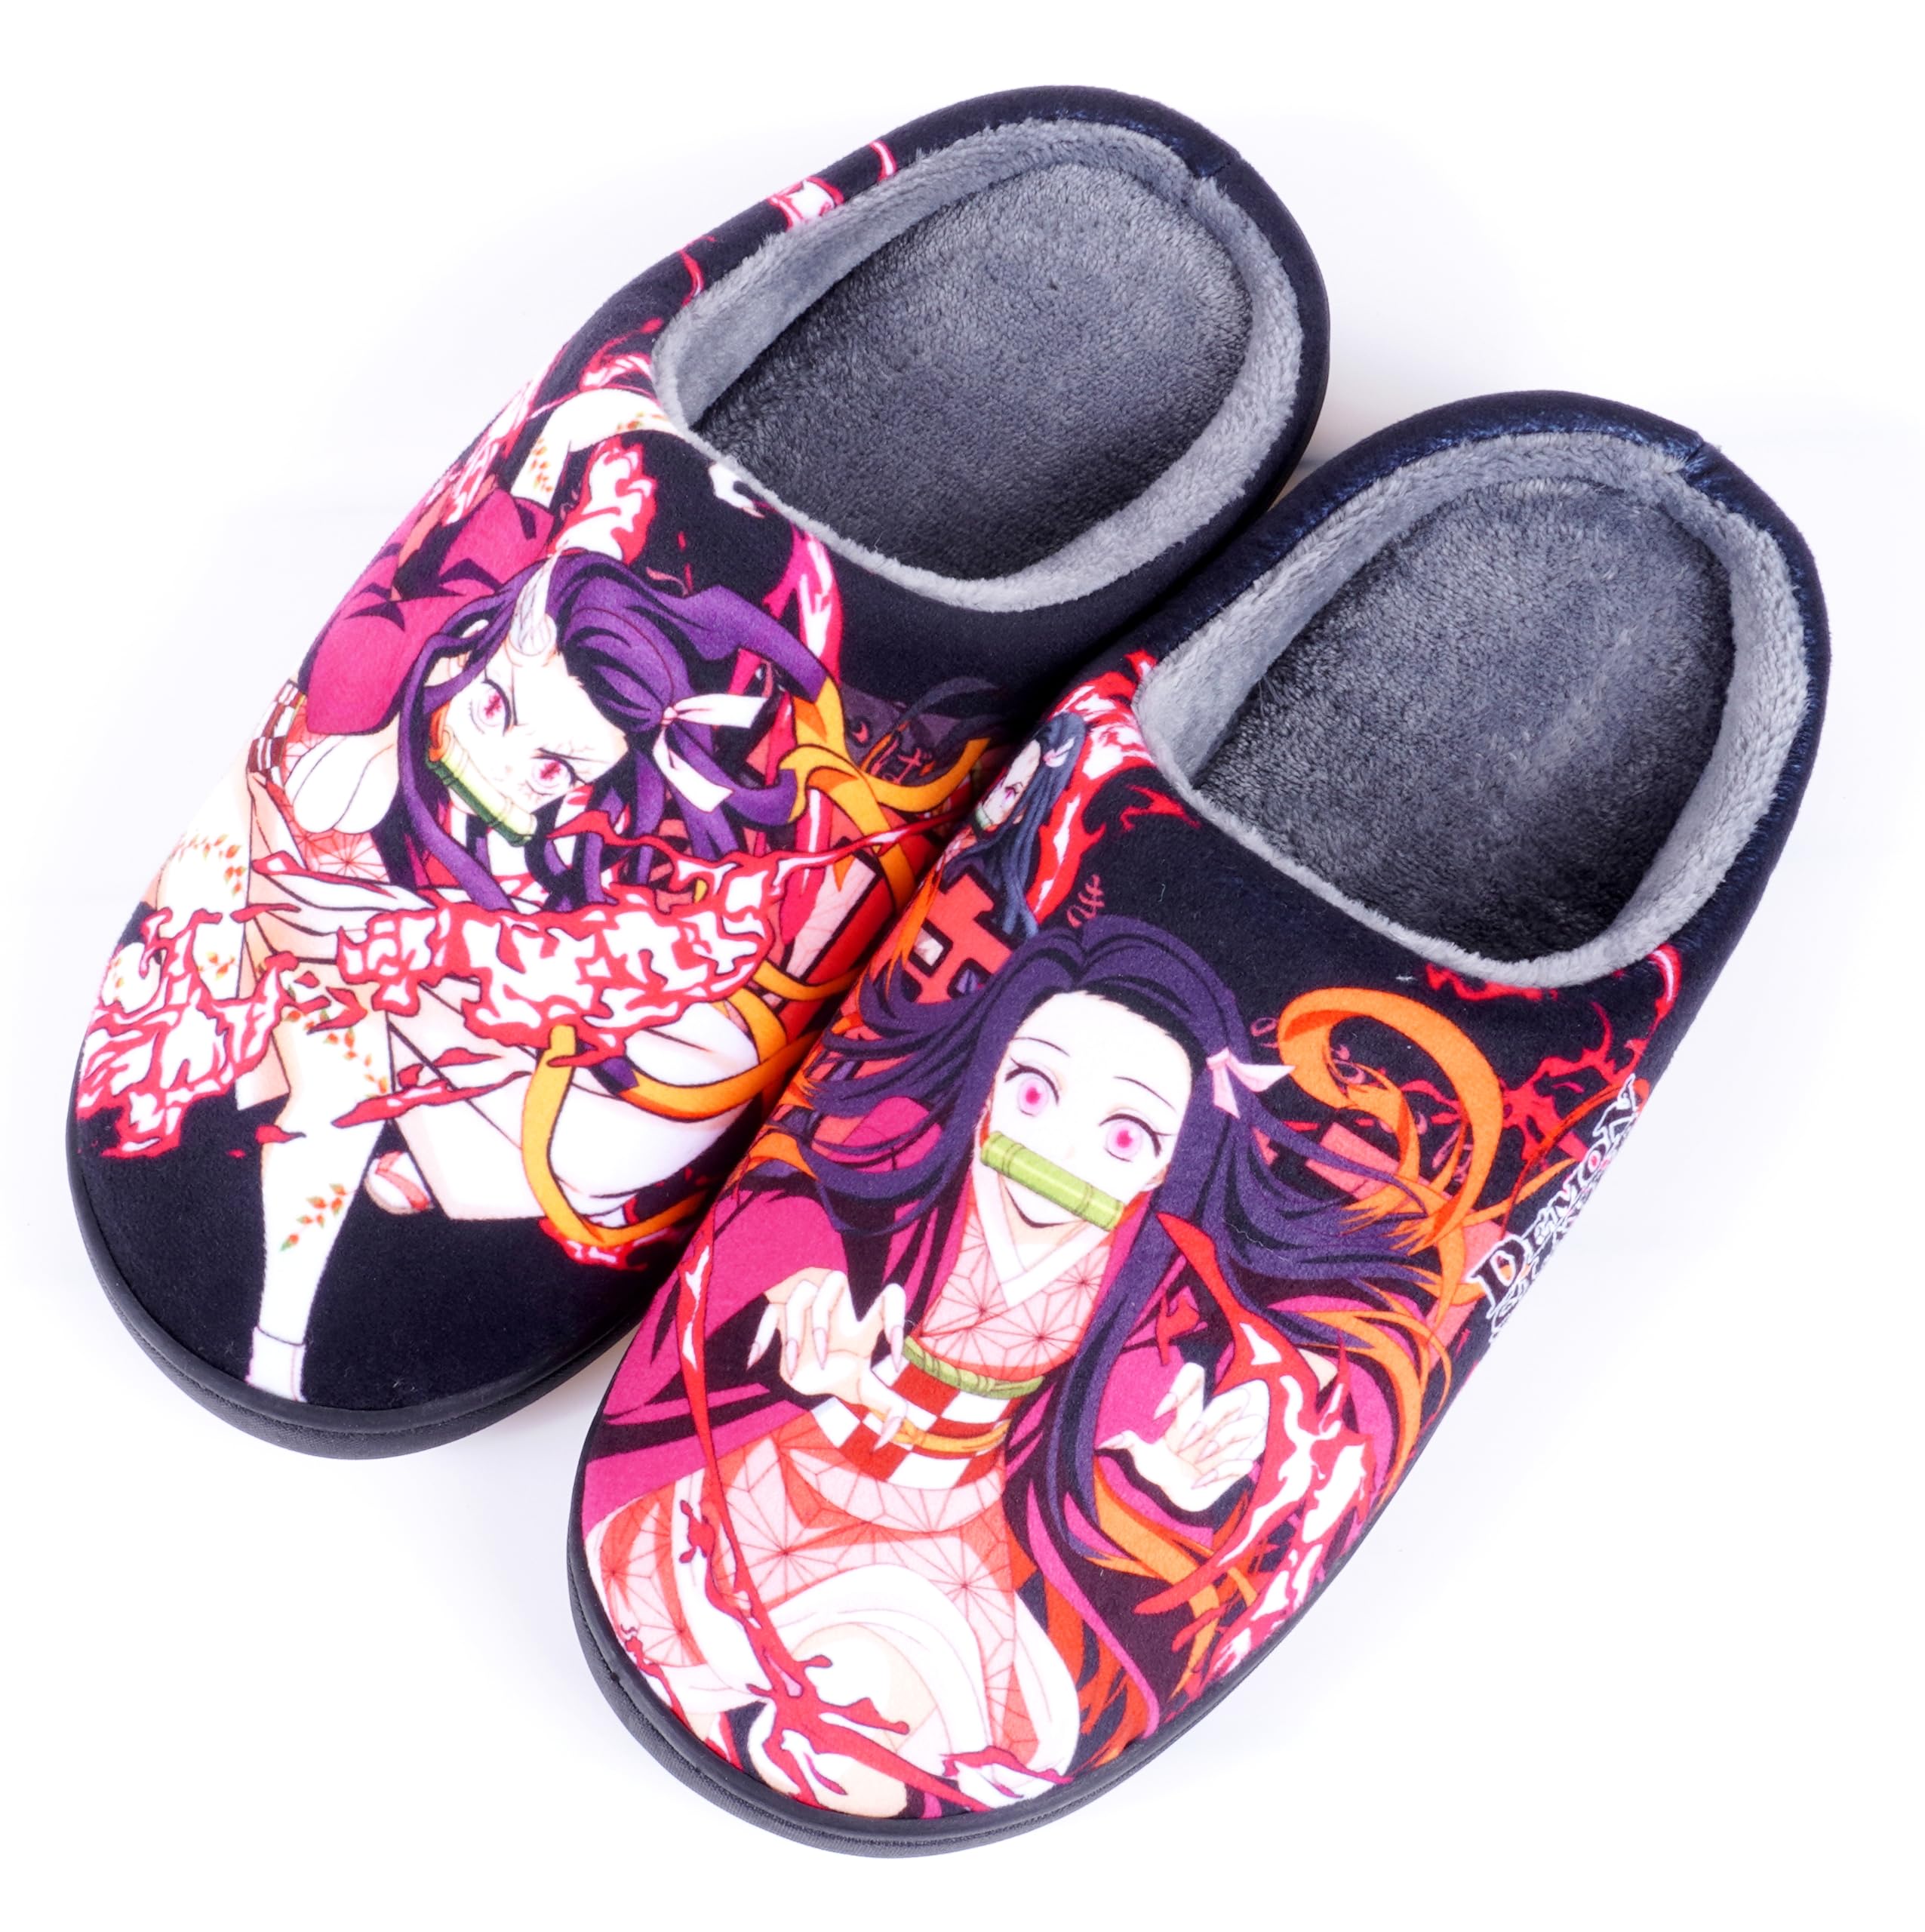 WANHONGYUE Anime Demon Slayer Slippers Women Men Fuzzy House Slippers Winter Anti-slip Indoor and Outdoor Slip on Shoes